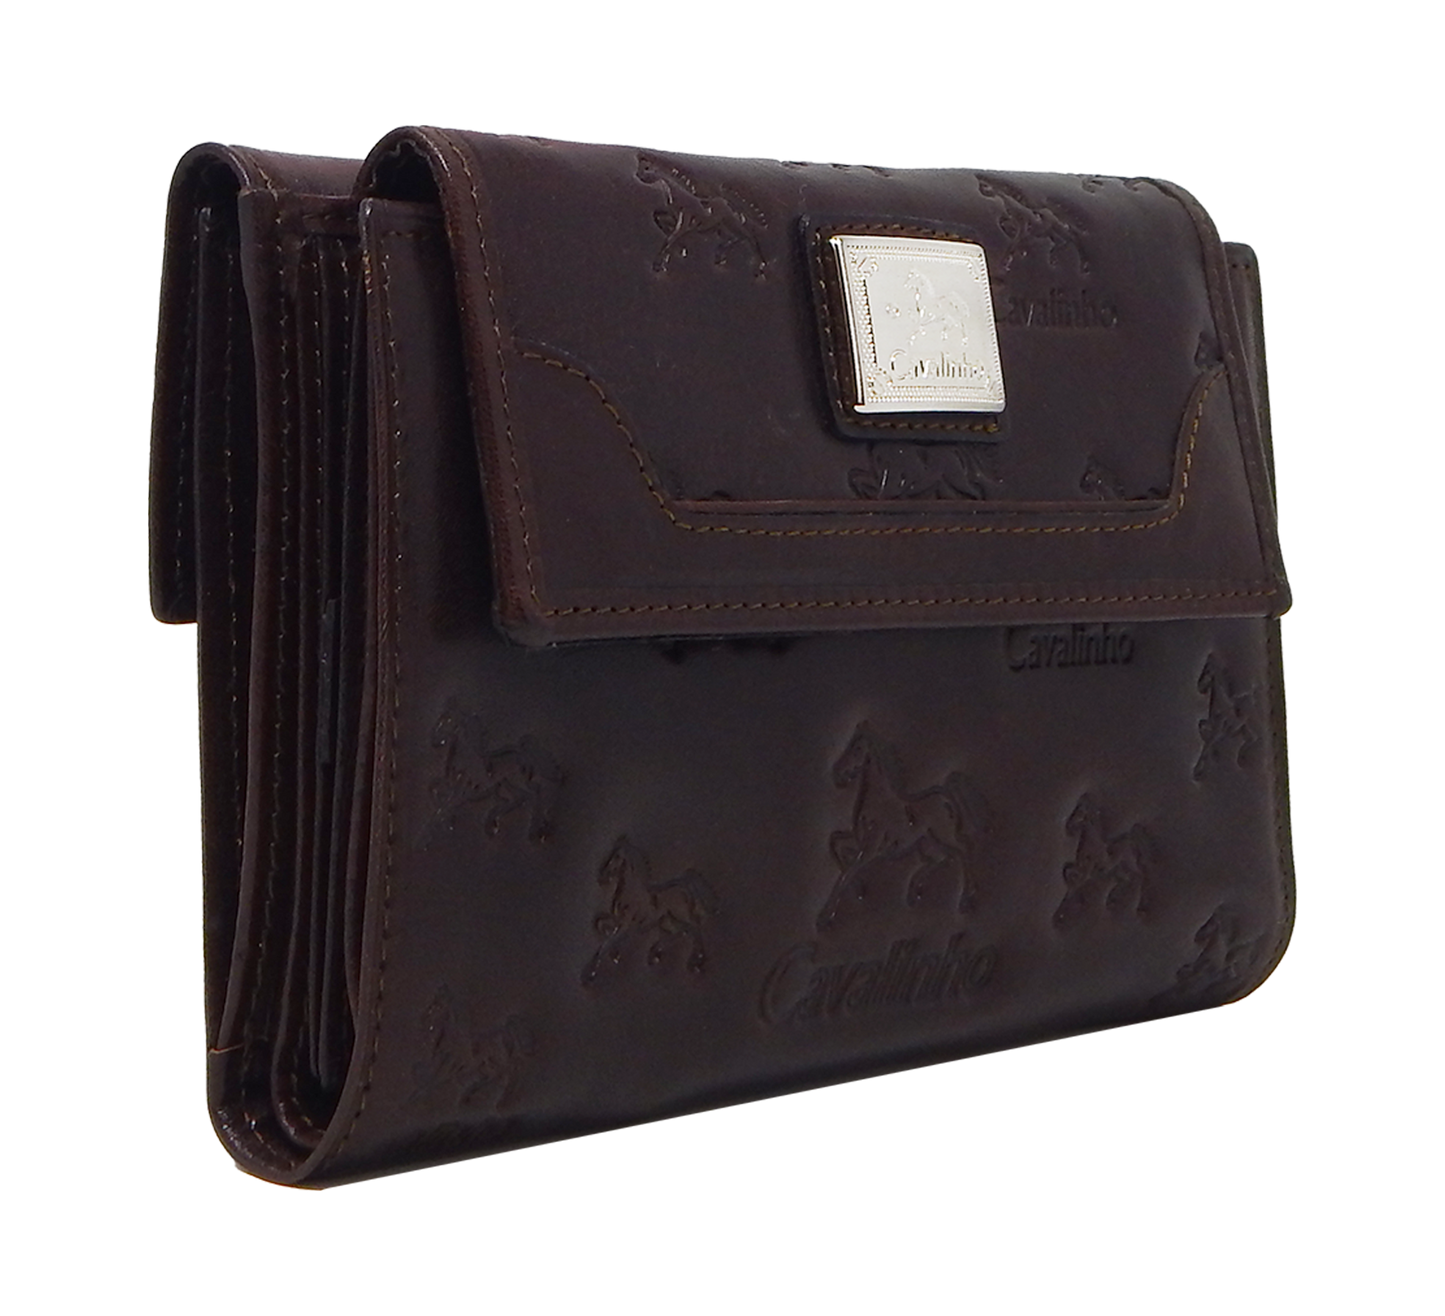 Cavalinho Cavalo Lusitano Leather Wallet - Brown - 28090205.02_2